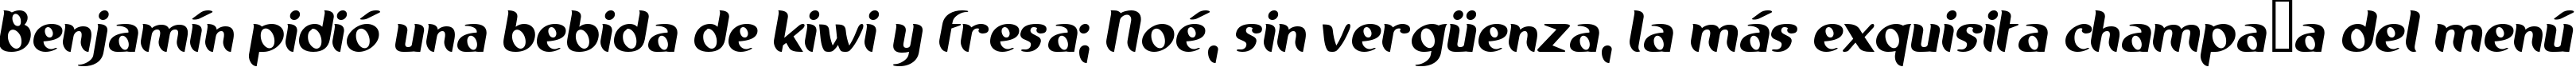 Пример написания шрифтом Running shoe текста на испанском